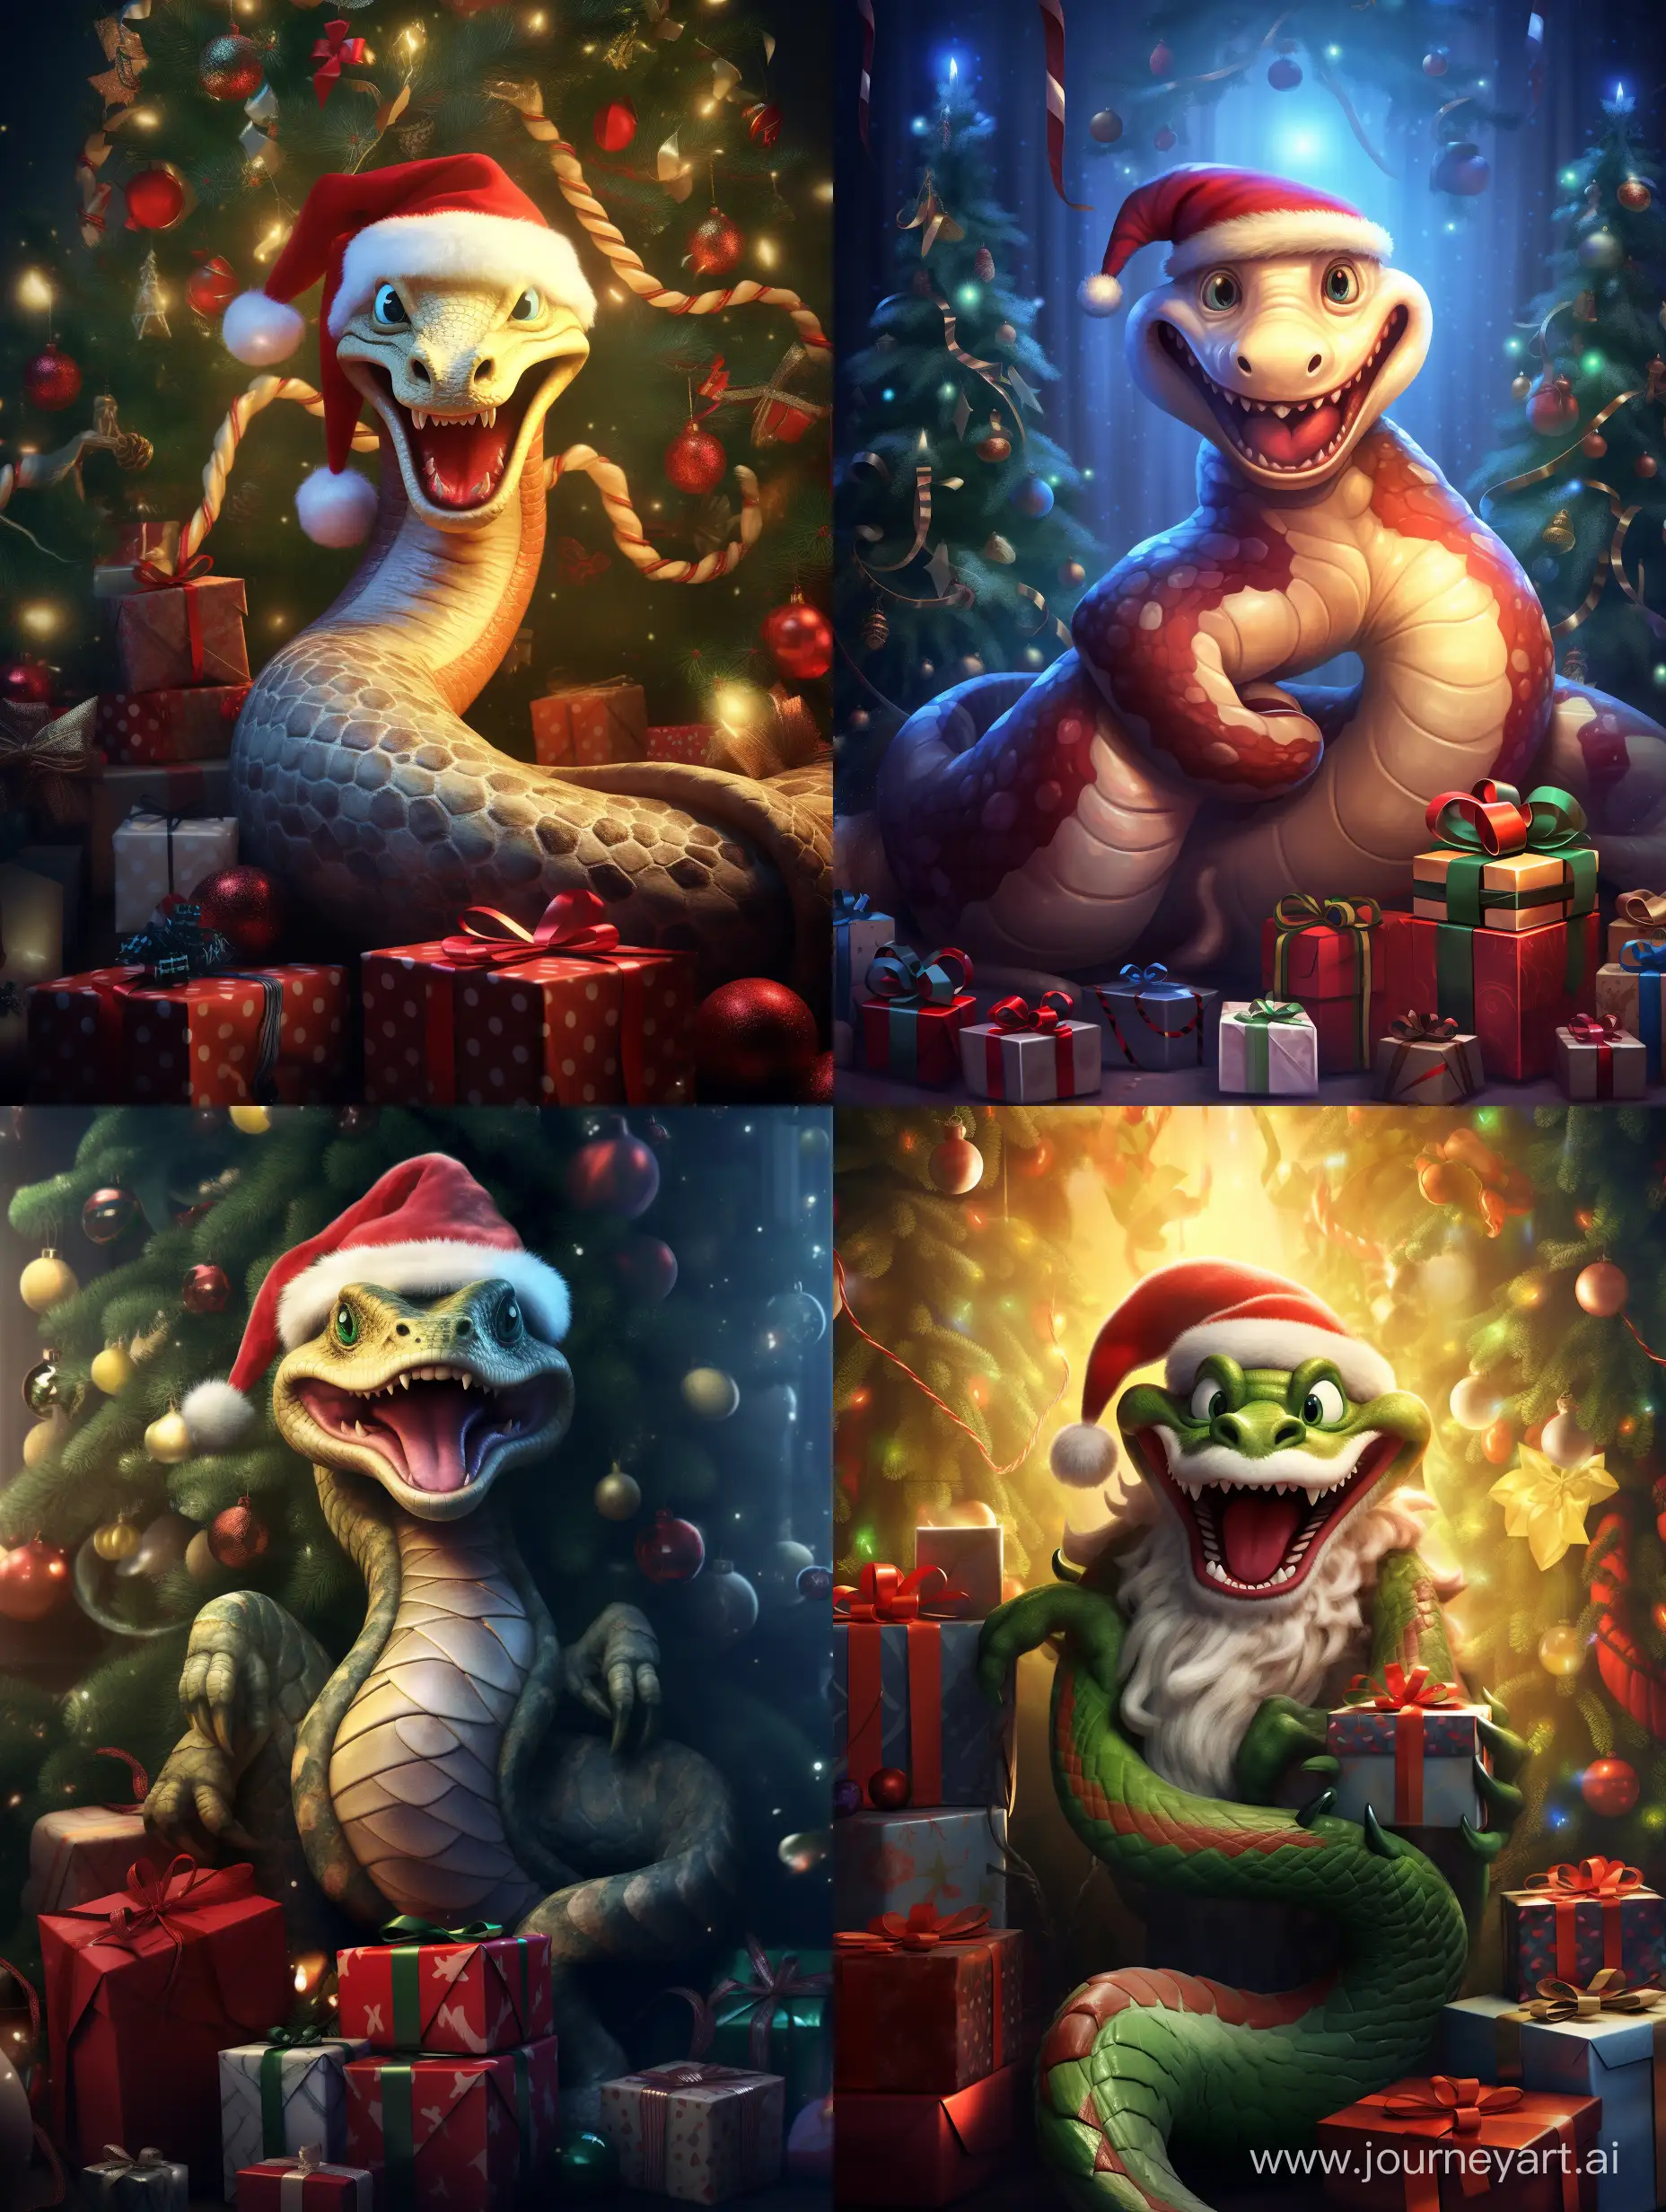 Adorable-DisneyStyle-Santa-Snake-in-Festive-Christmas-Scene